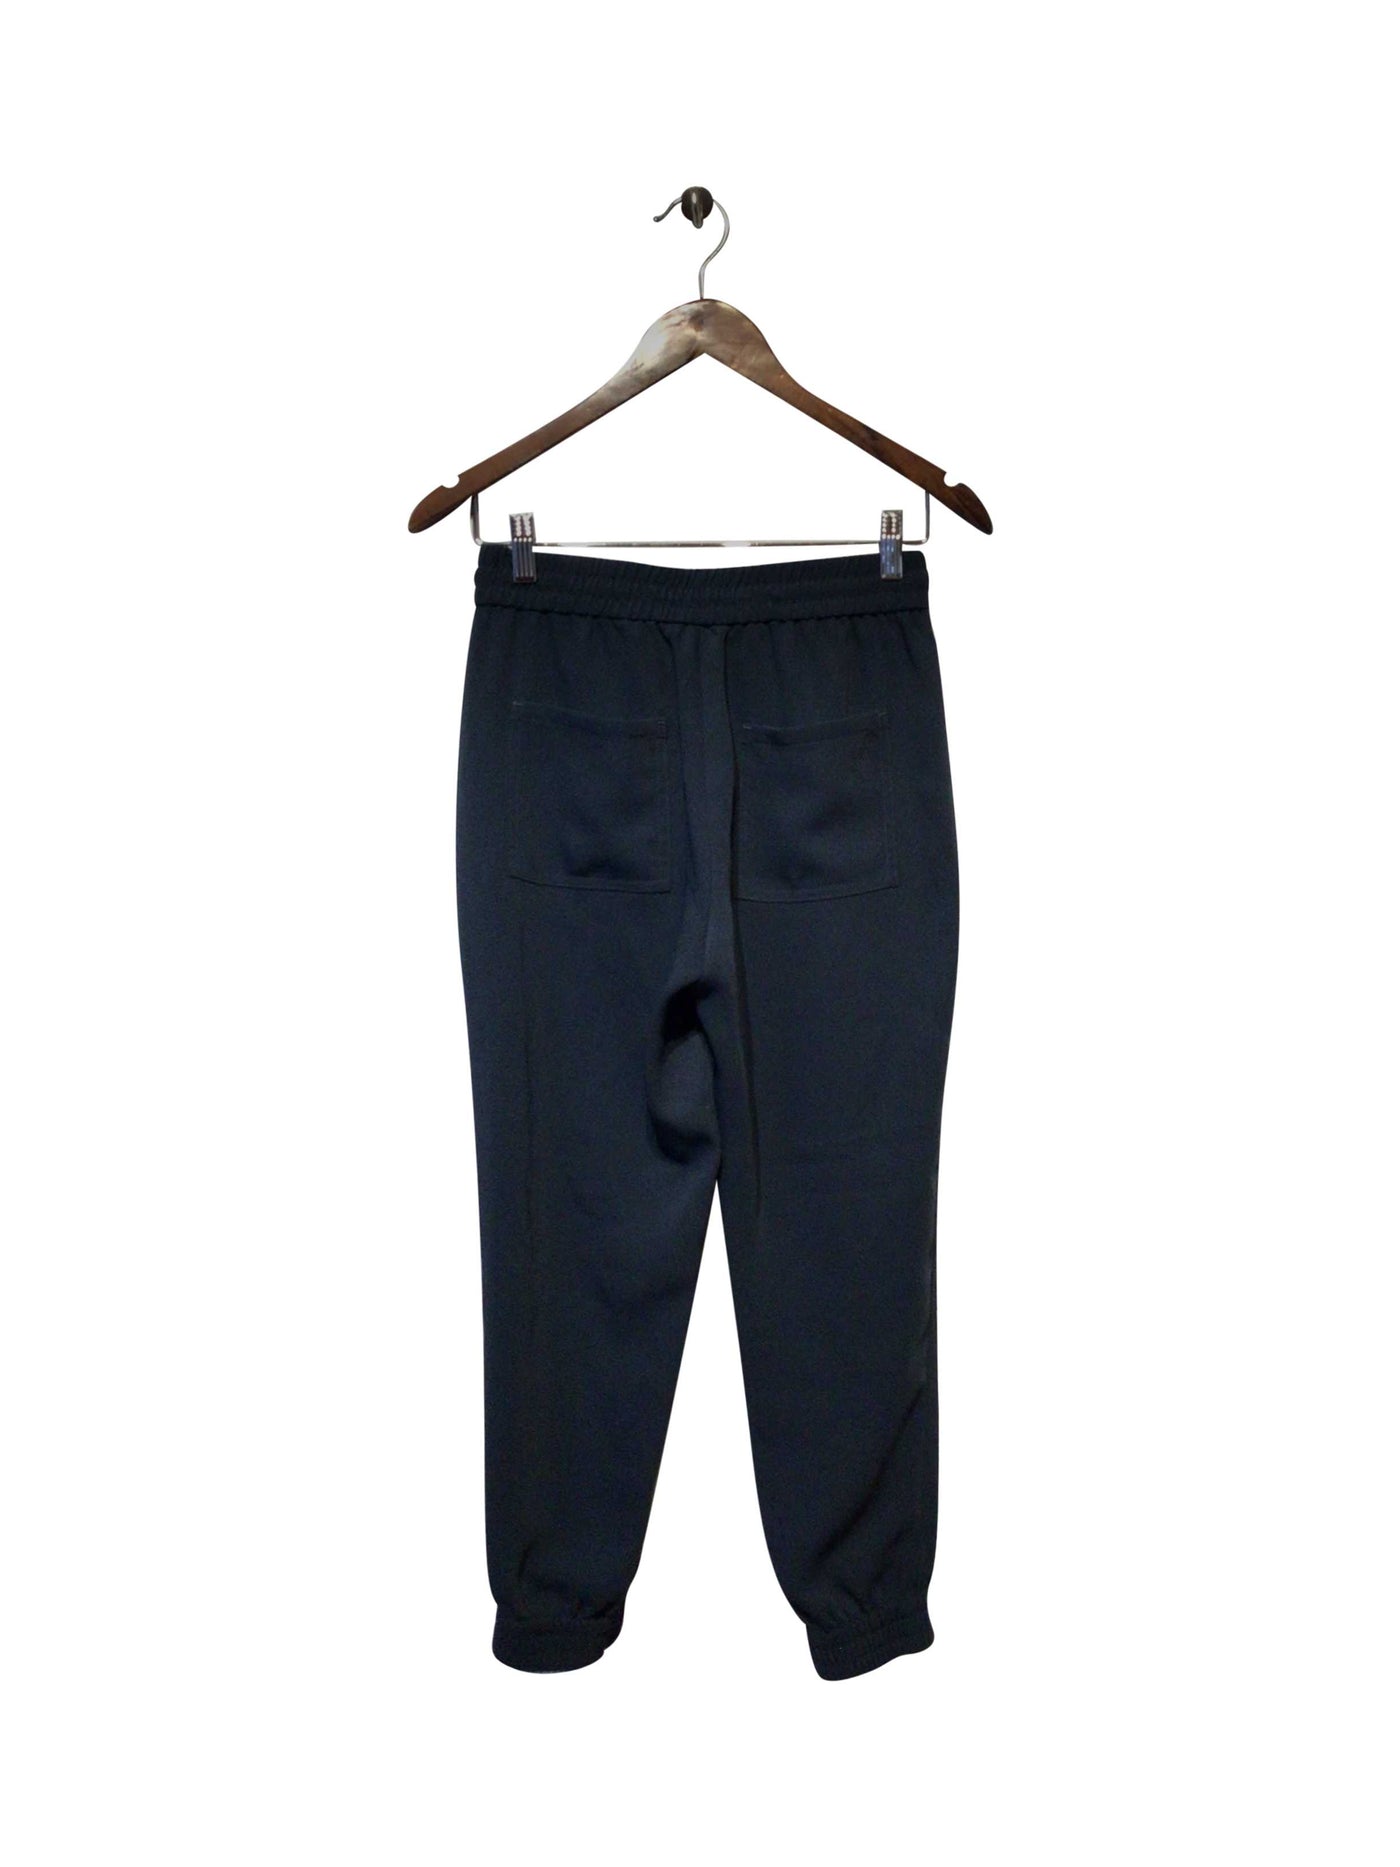 ANN TAYLOR Regular fit Pant in Blue  -  XS  18.26 Koop